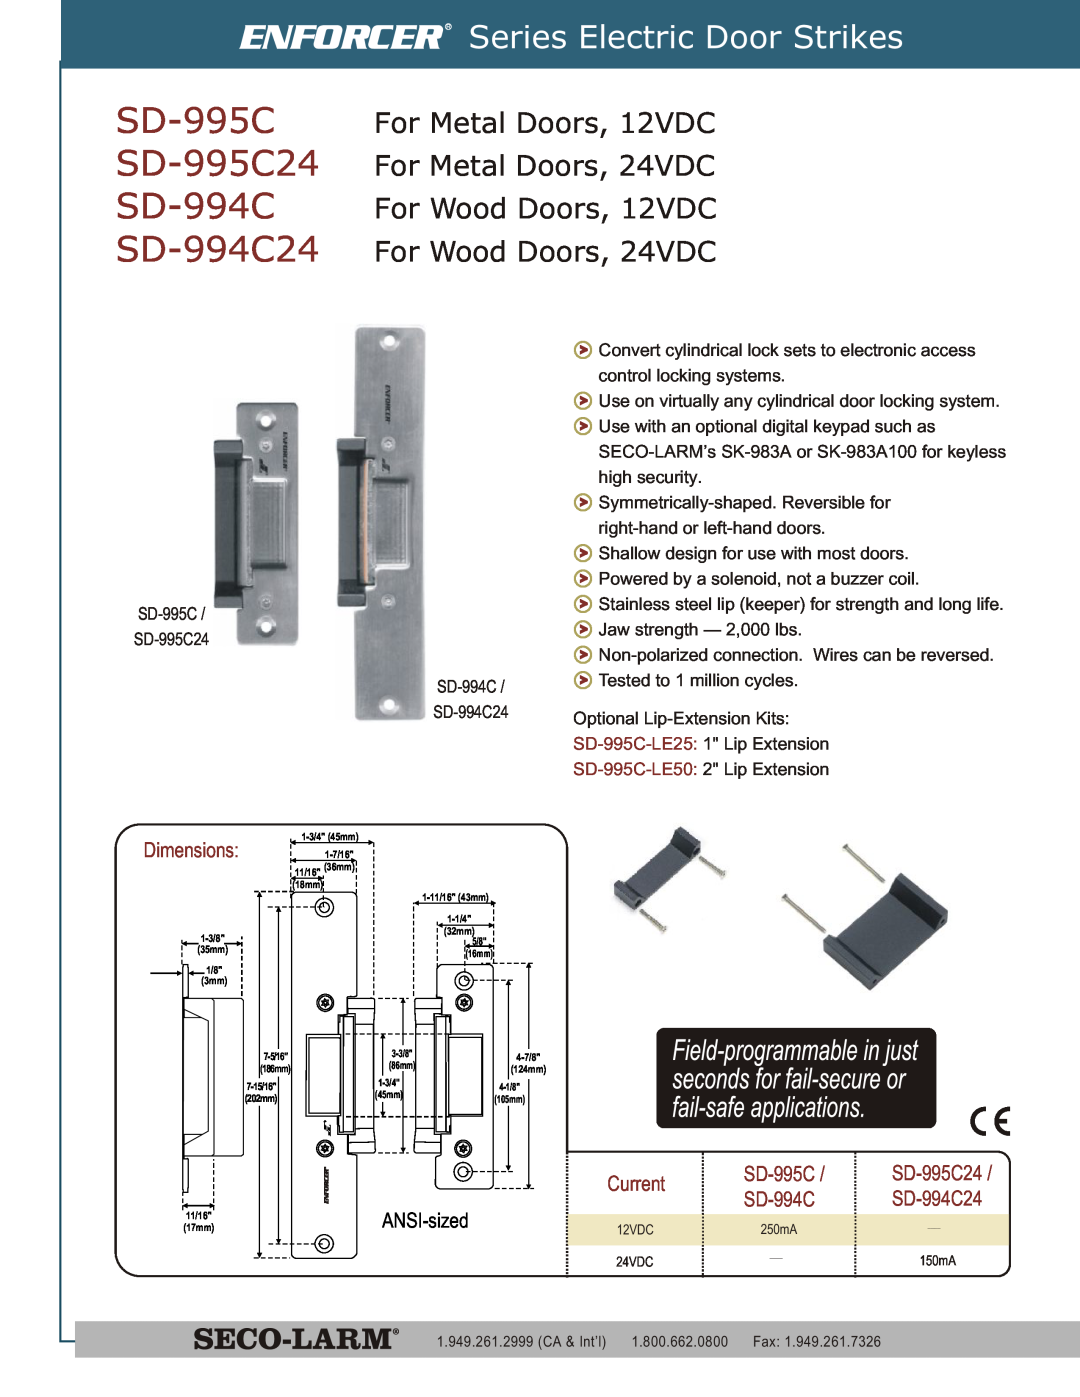 SECO-LARM USA SD-995C24, SD-994C24 dimensions Series Electric Door Strikes, Dimensions 